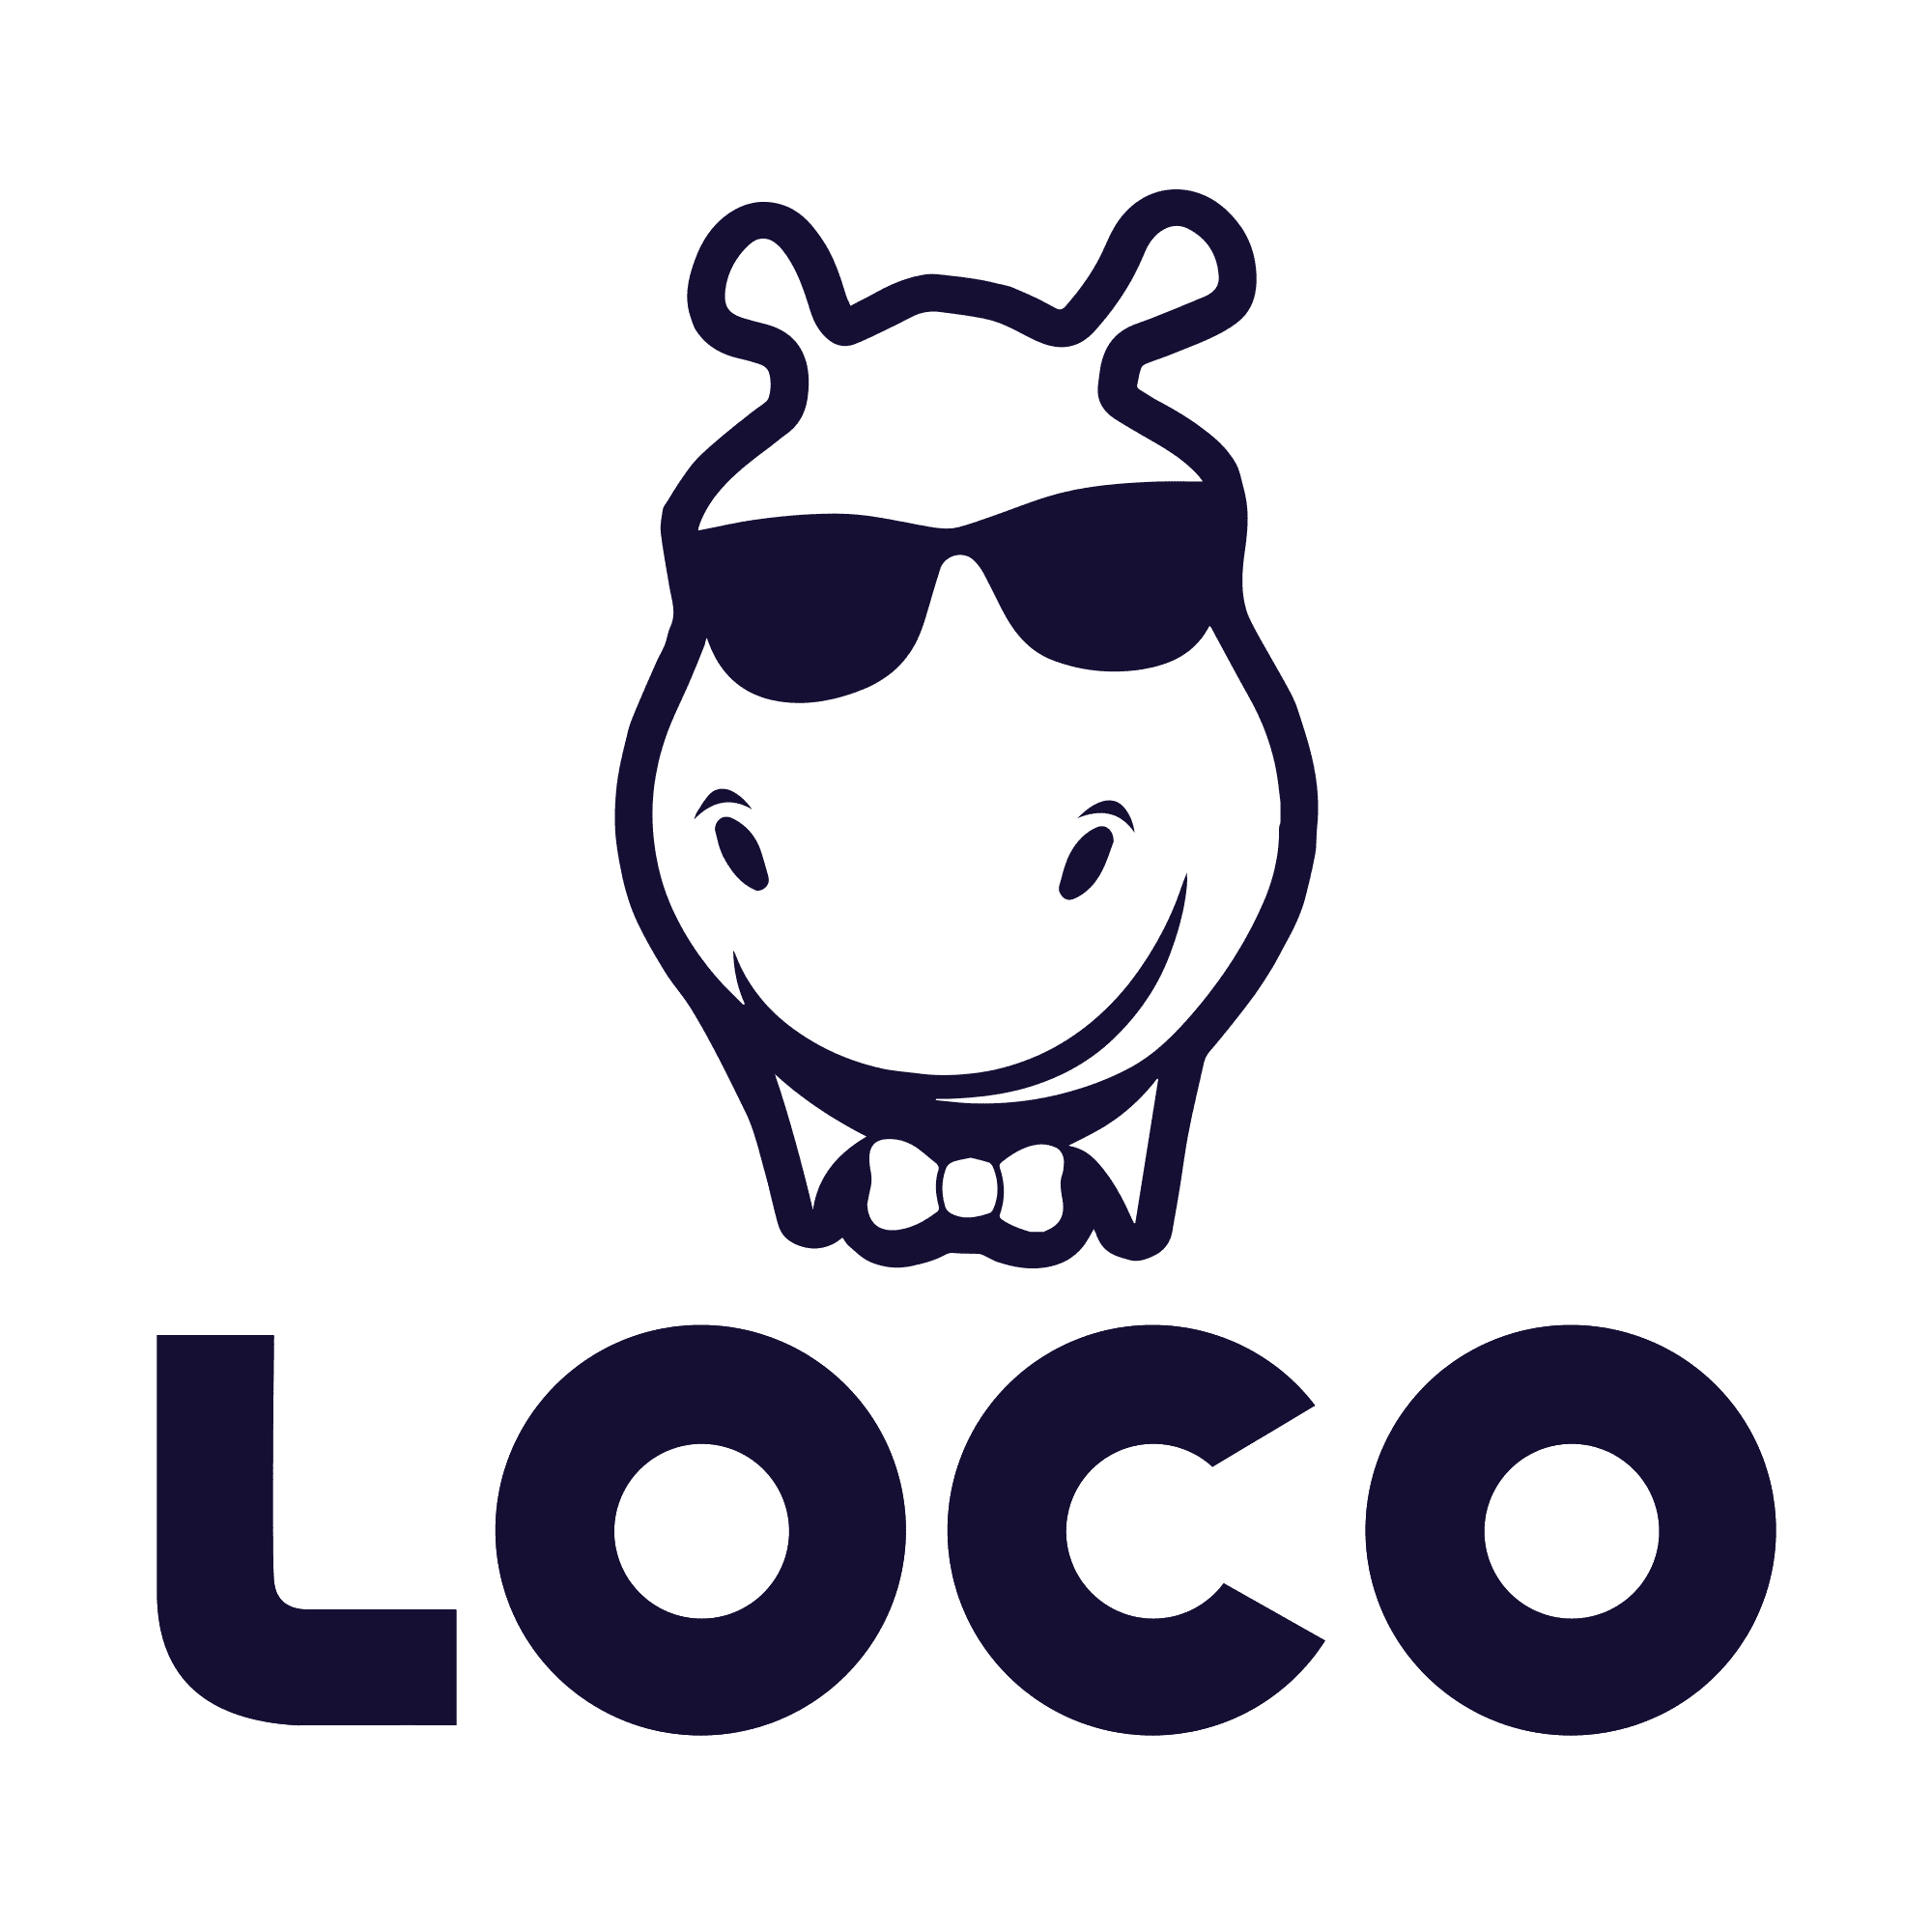 Loco Celebrates 1 year of #GamingTogether